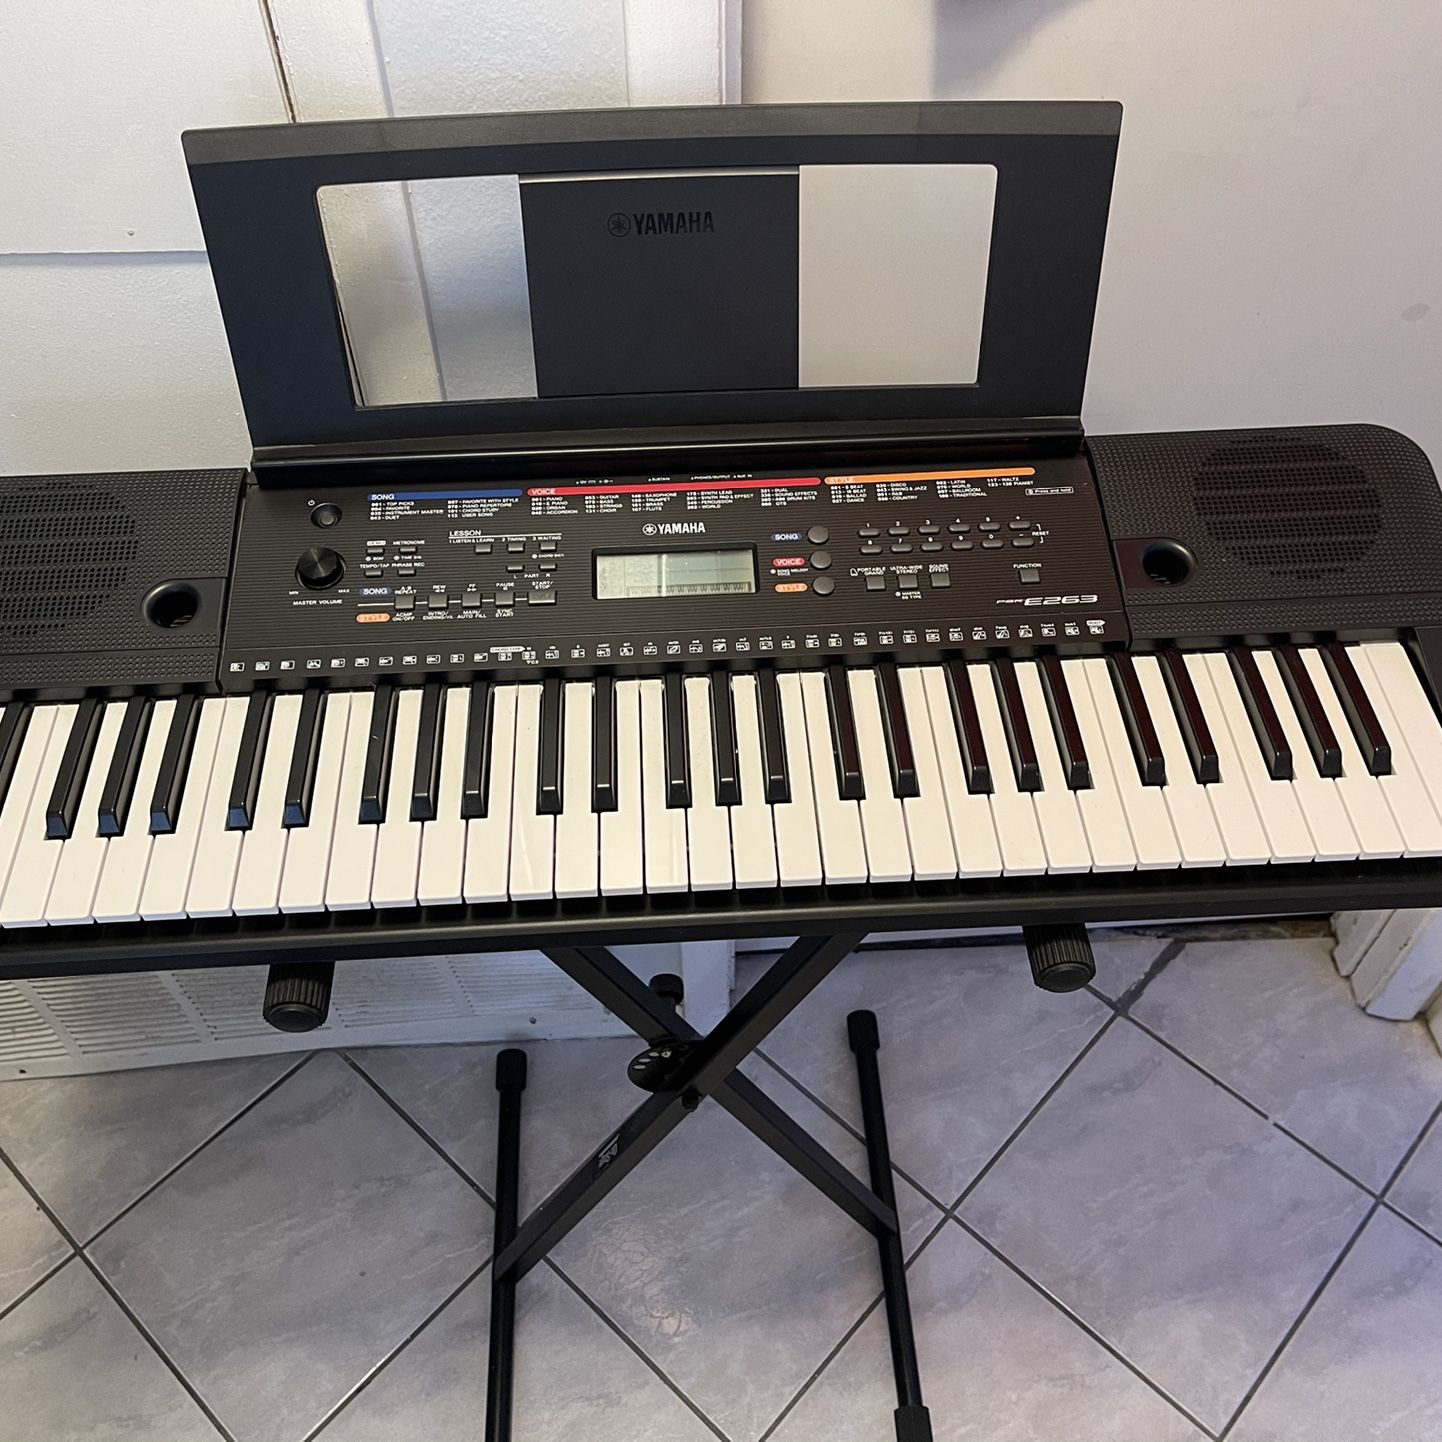 Yamaha Piano Keyboard With Stand